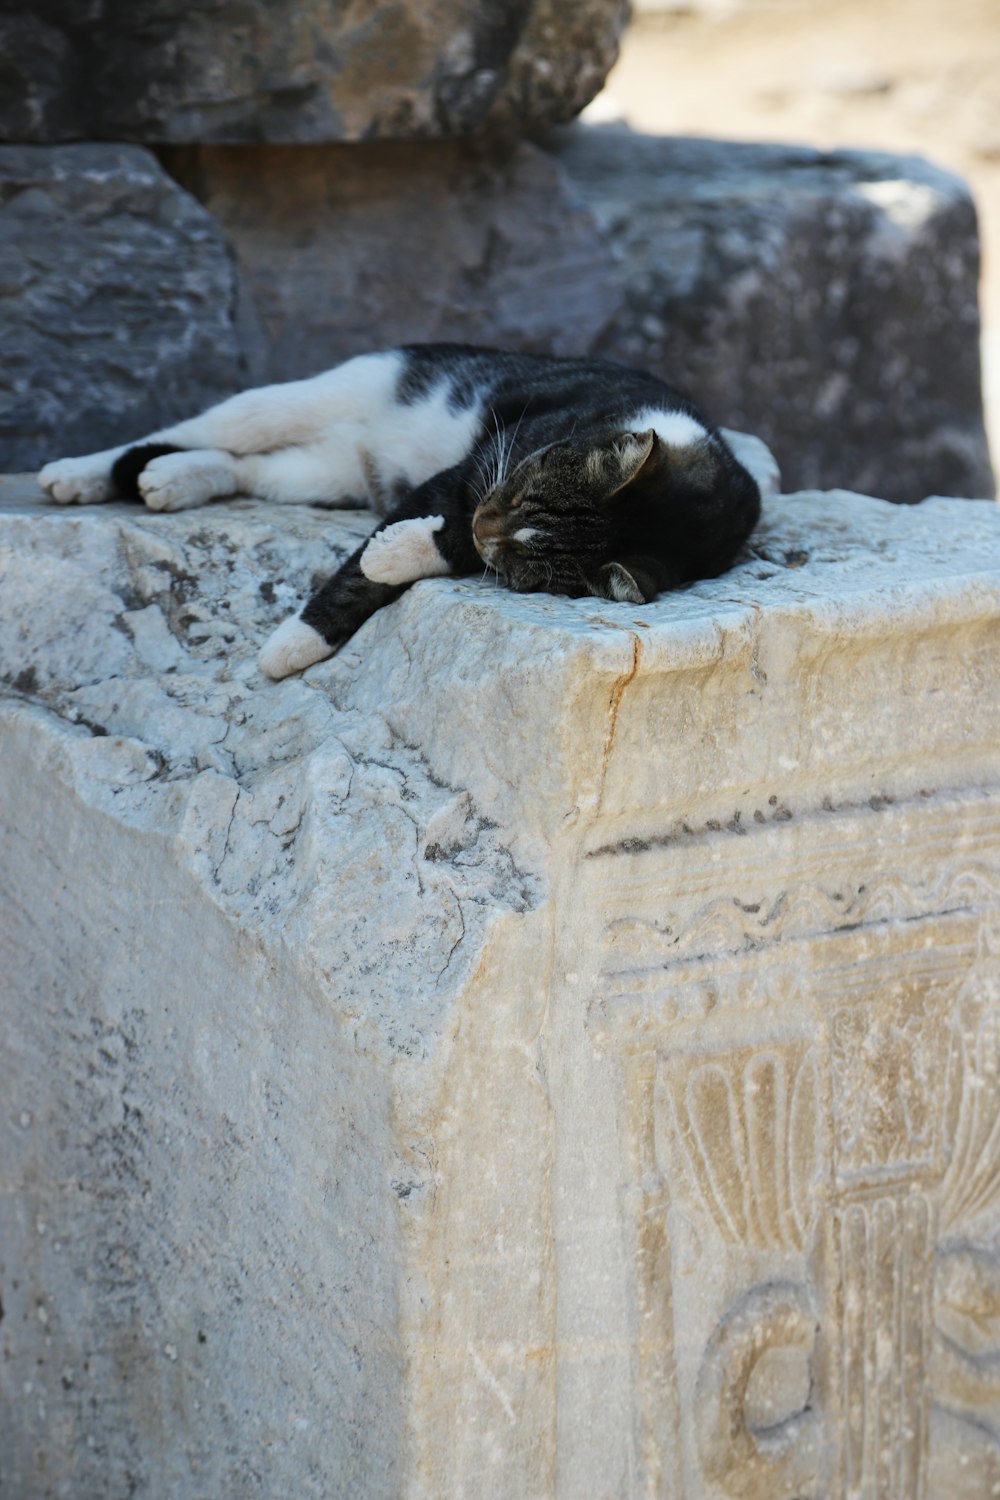 a cat lying on a rock